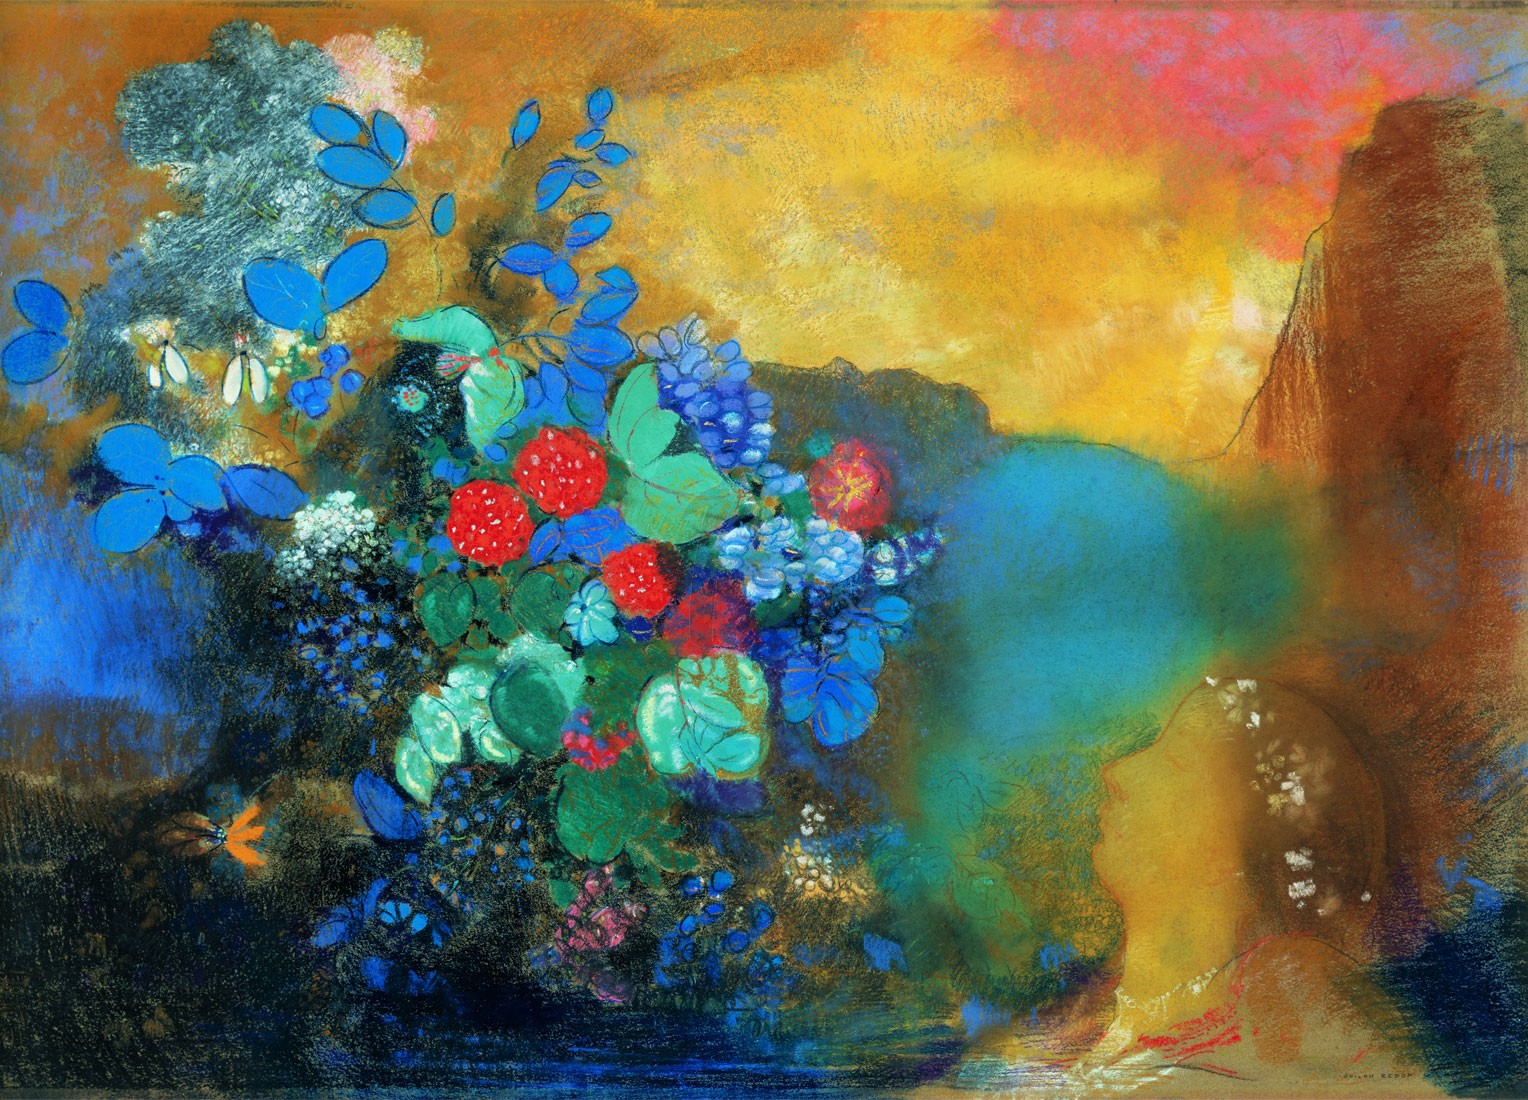 Odilon Redon - Ophelia among the Flowers (Hand-Painted)